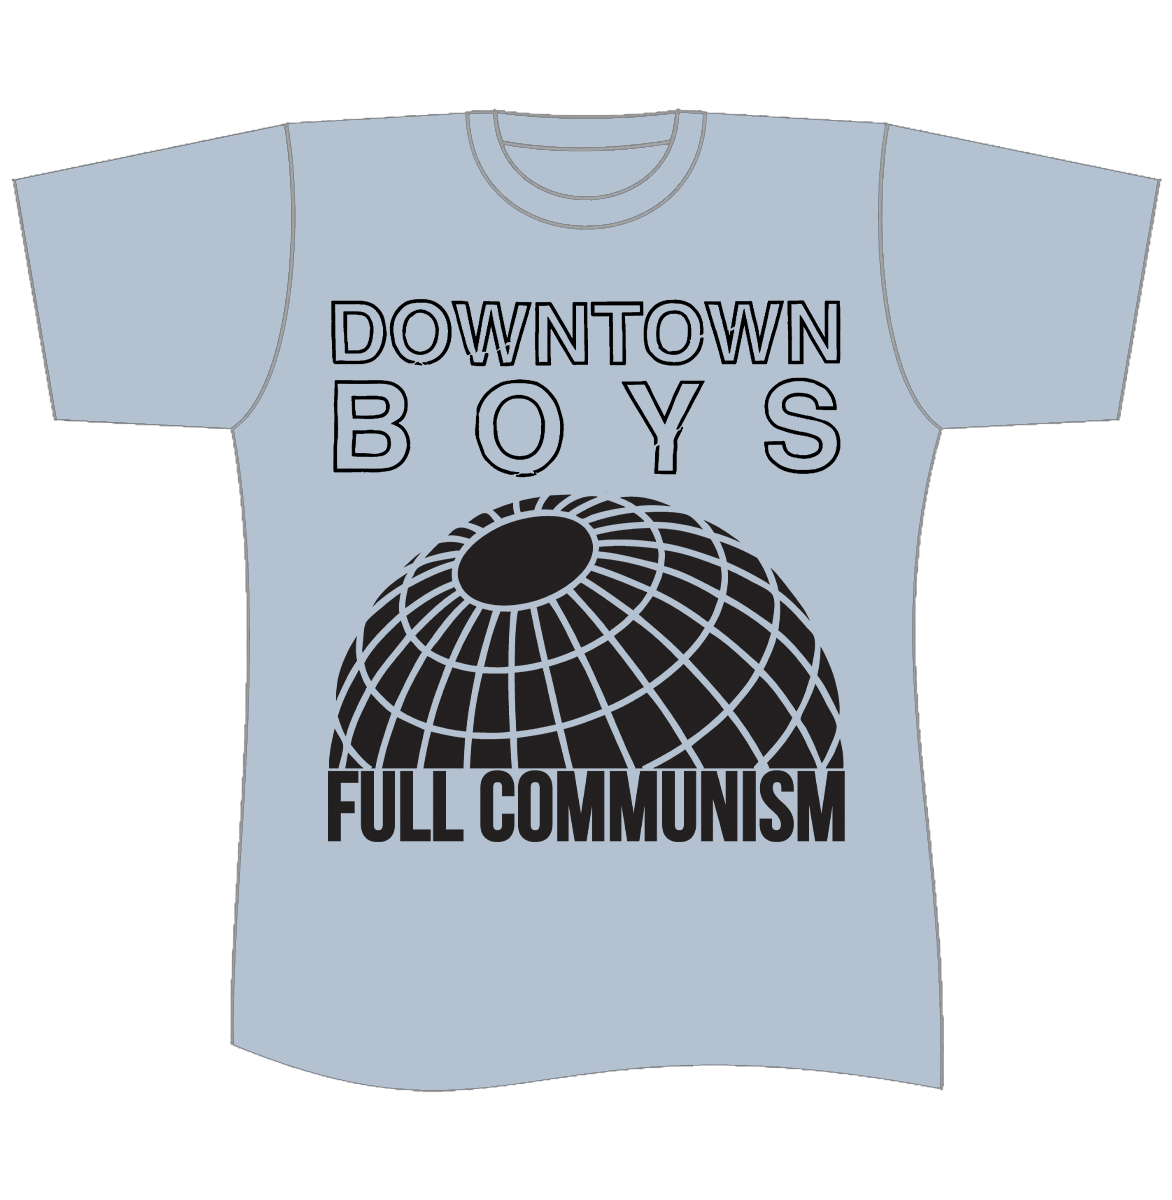 Downtown Boys "Full Communism" T-Shirt